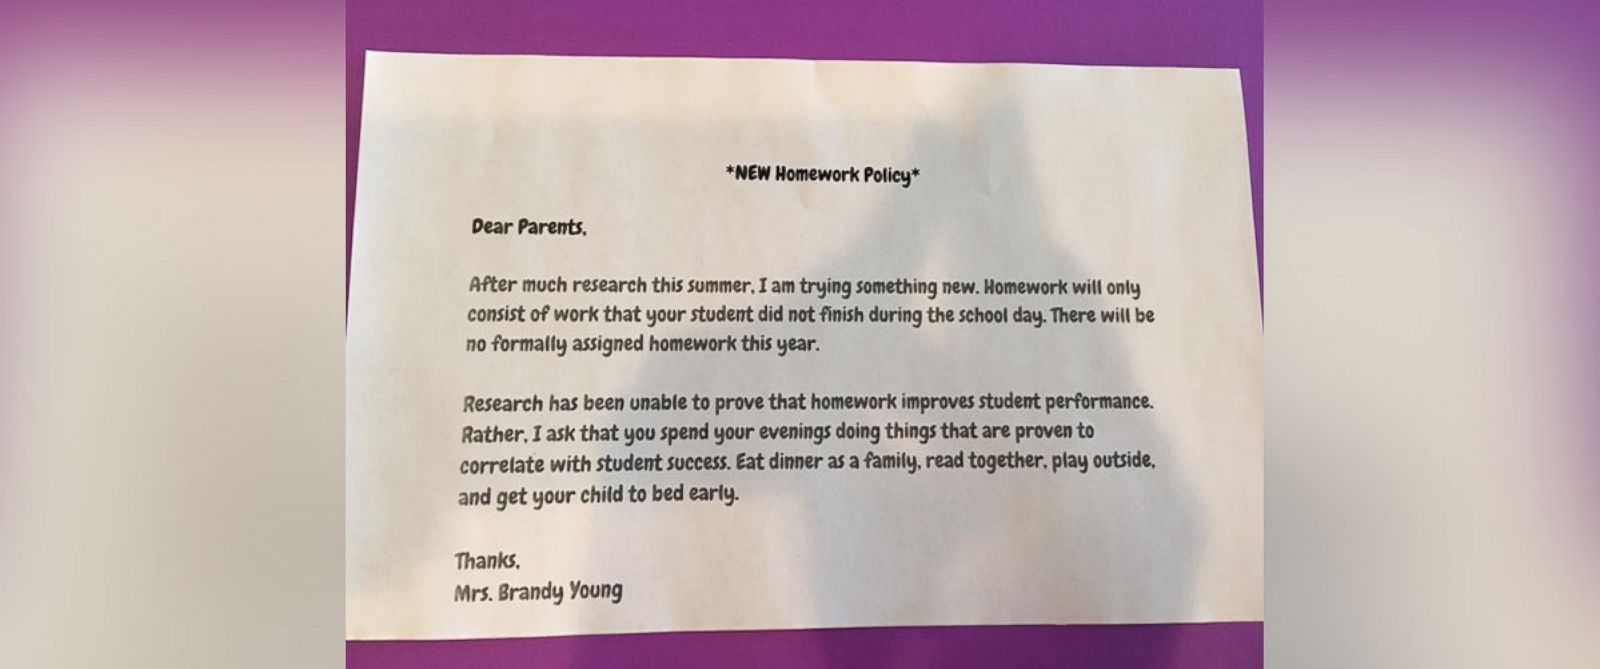 Parent letter regarding homework